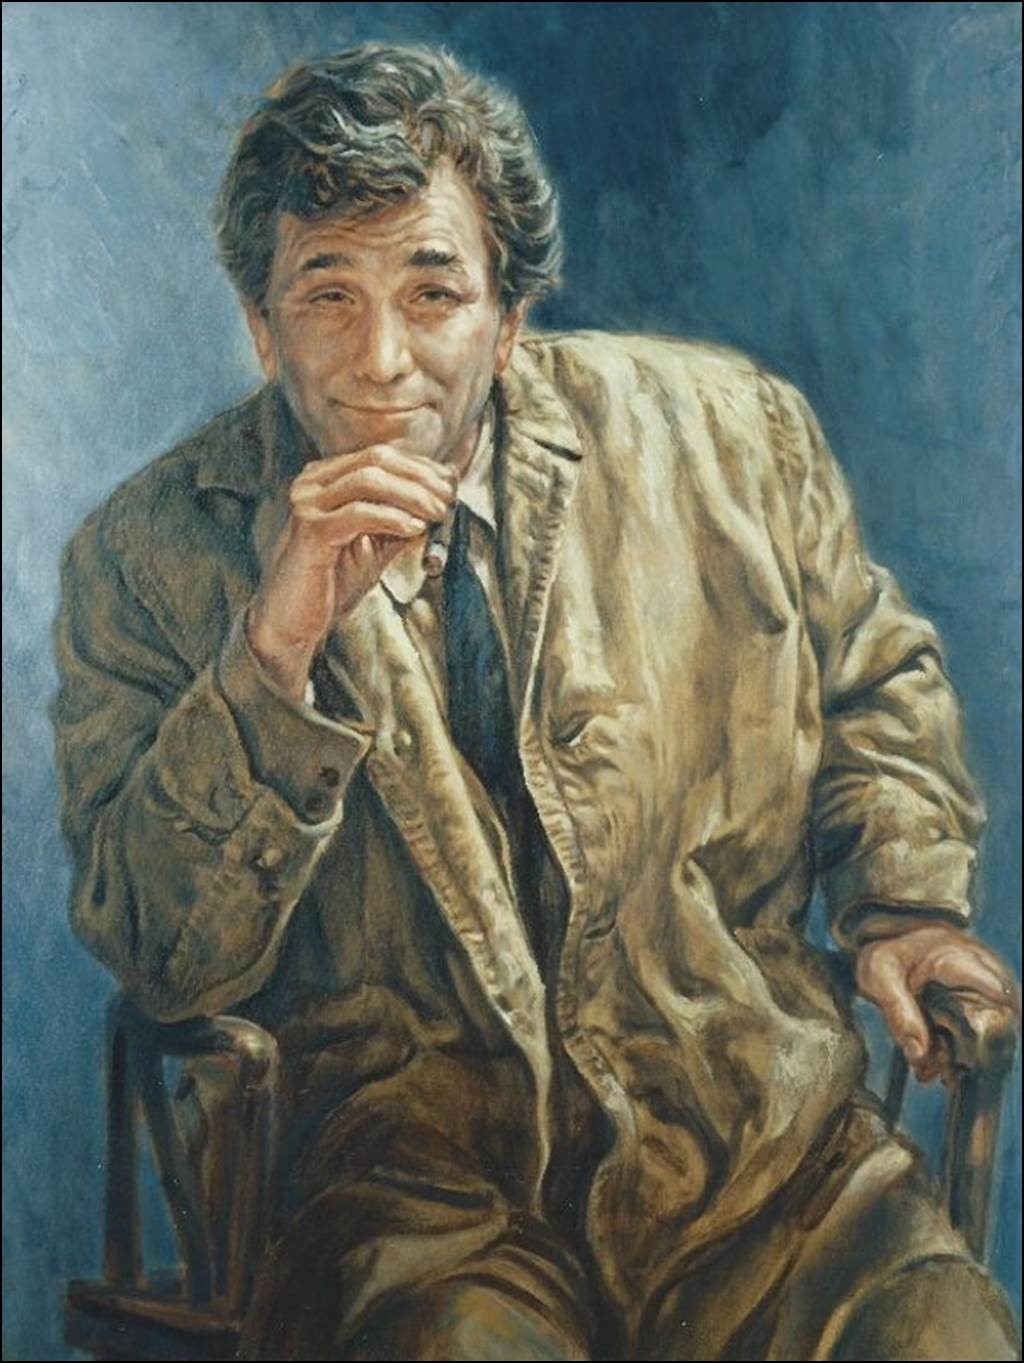 The painting by Jaroslav Gebr of Peter Falk as Columbo from Season 9, Episode 1: Murder, A Self Portrait